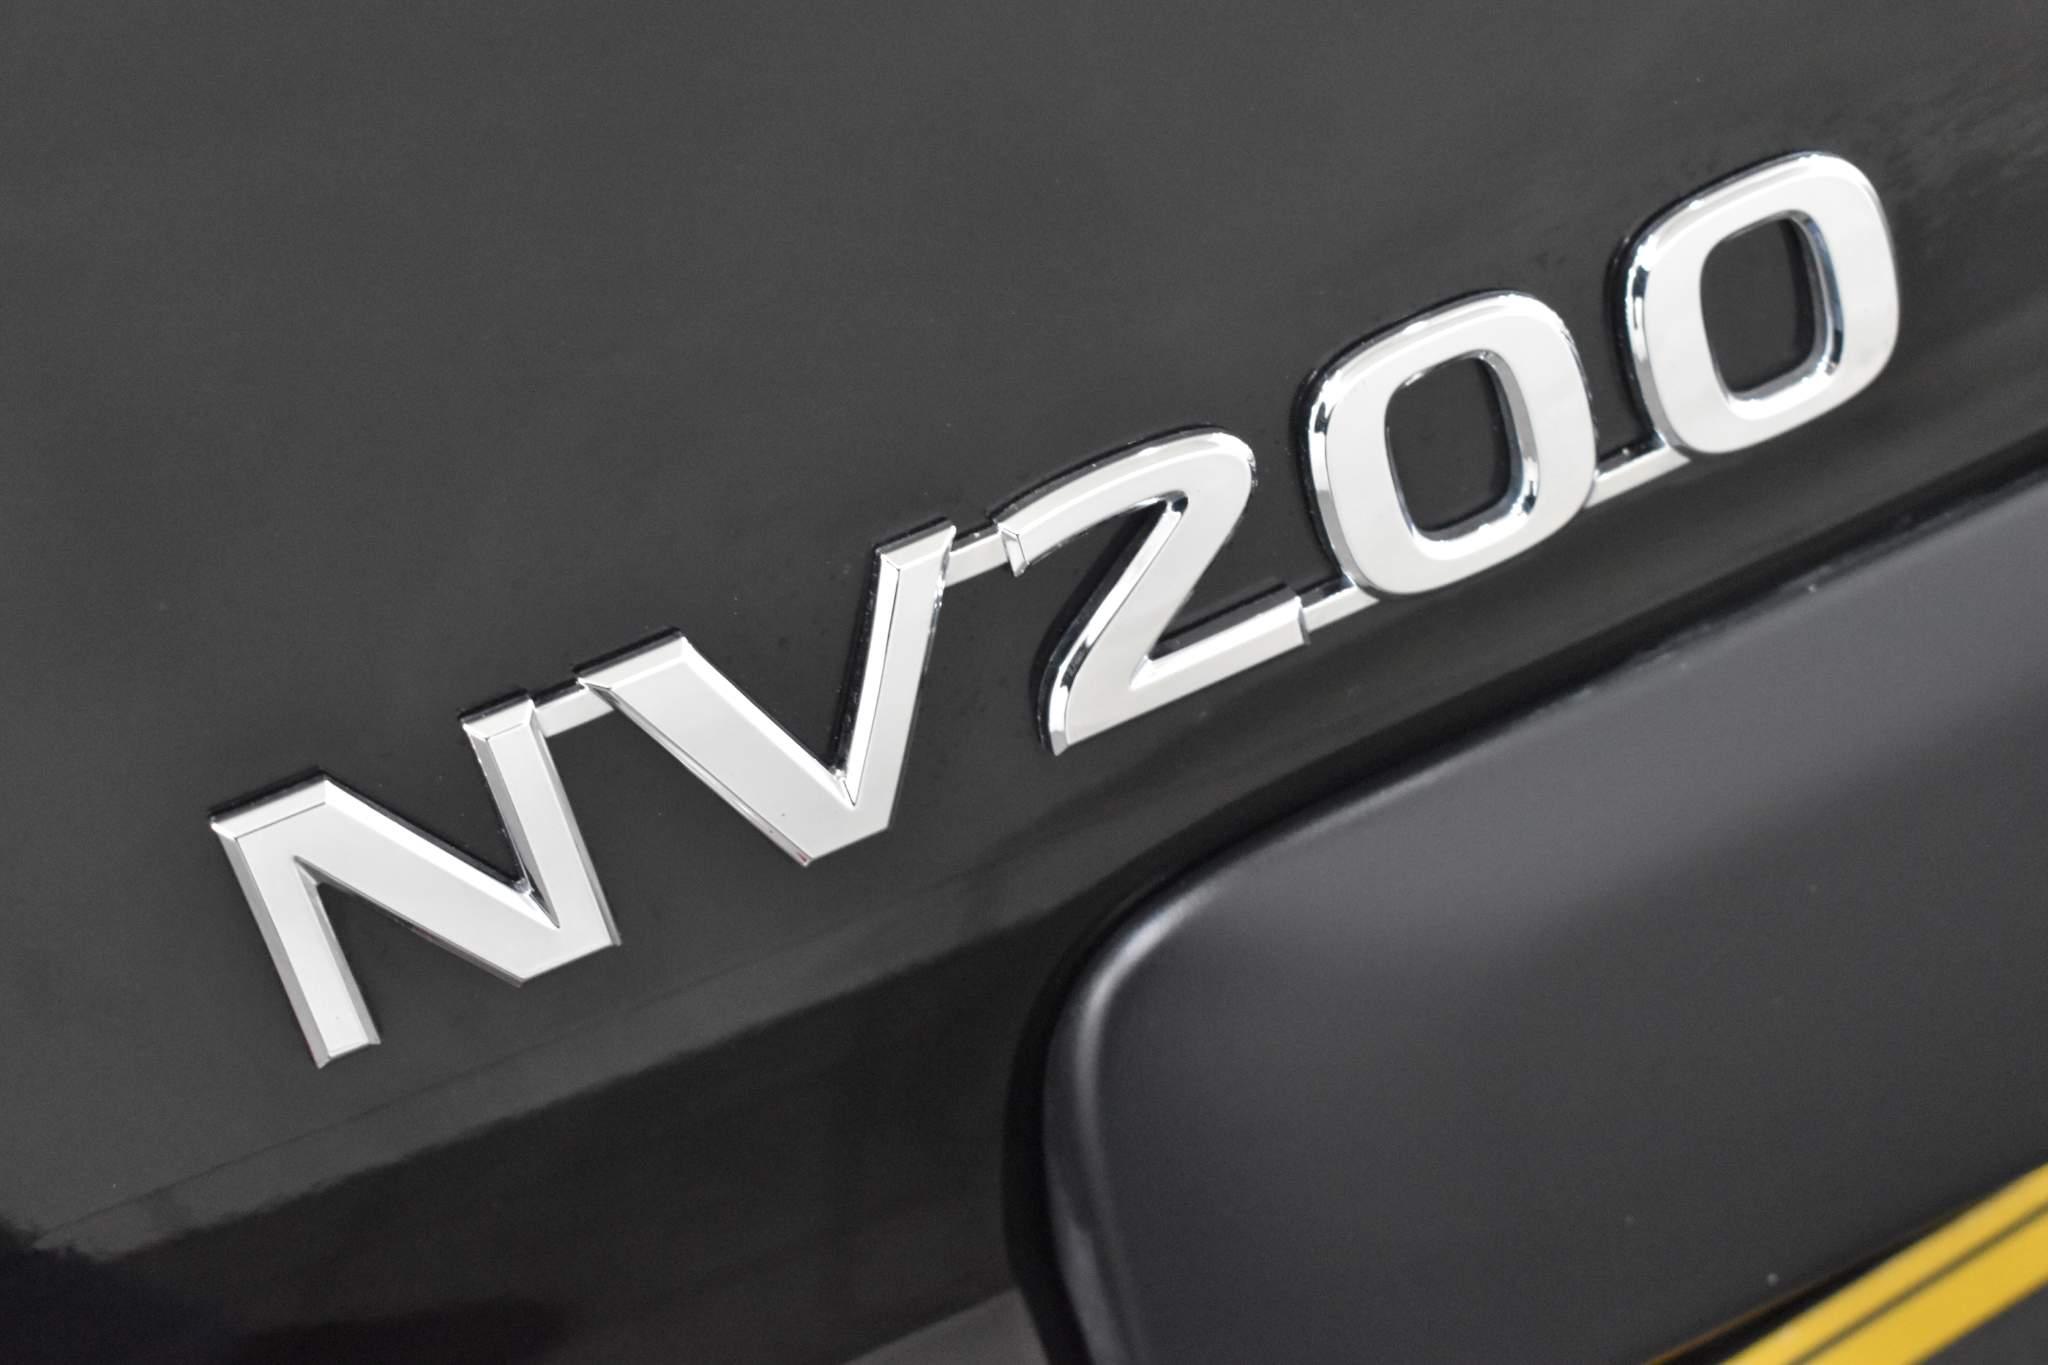 Nissan NV200